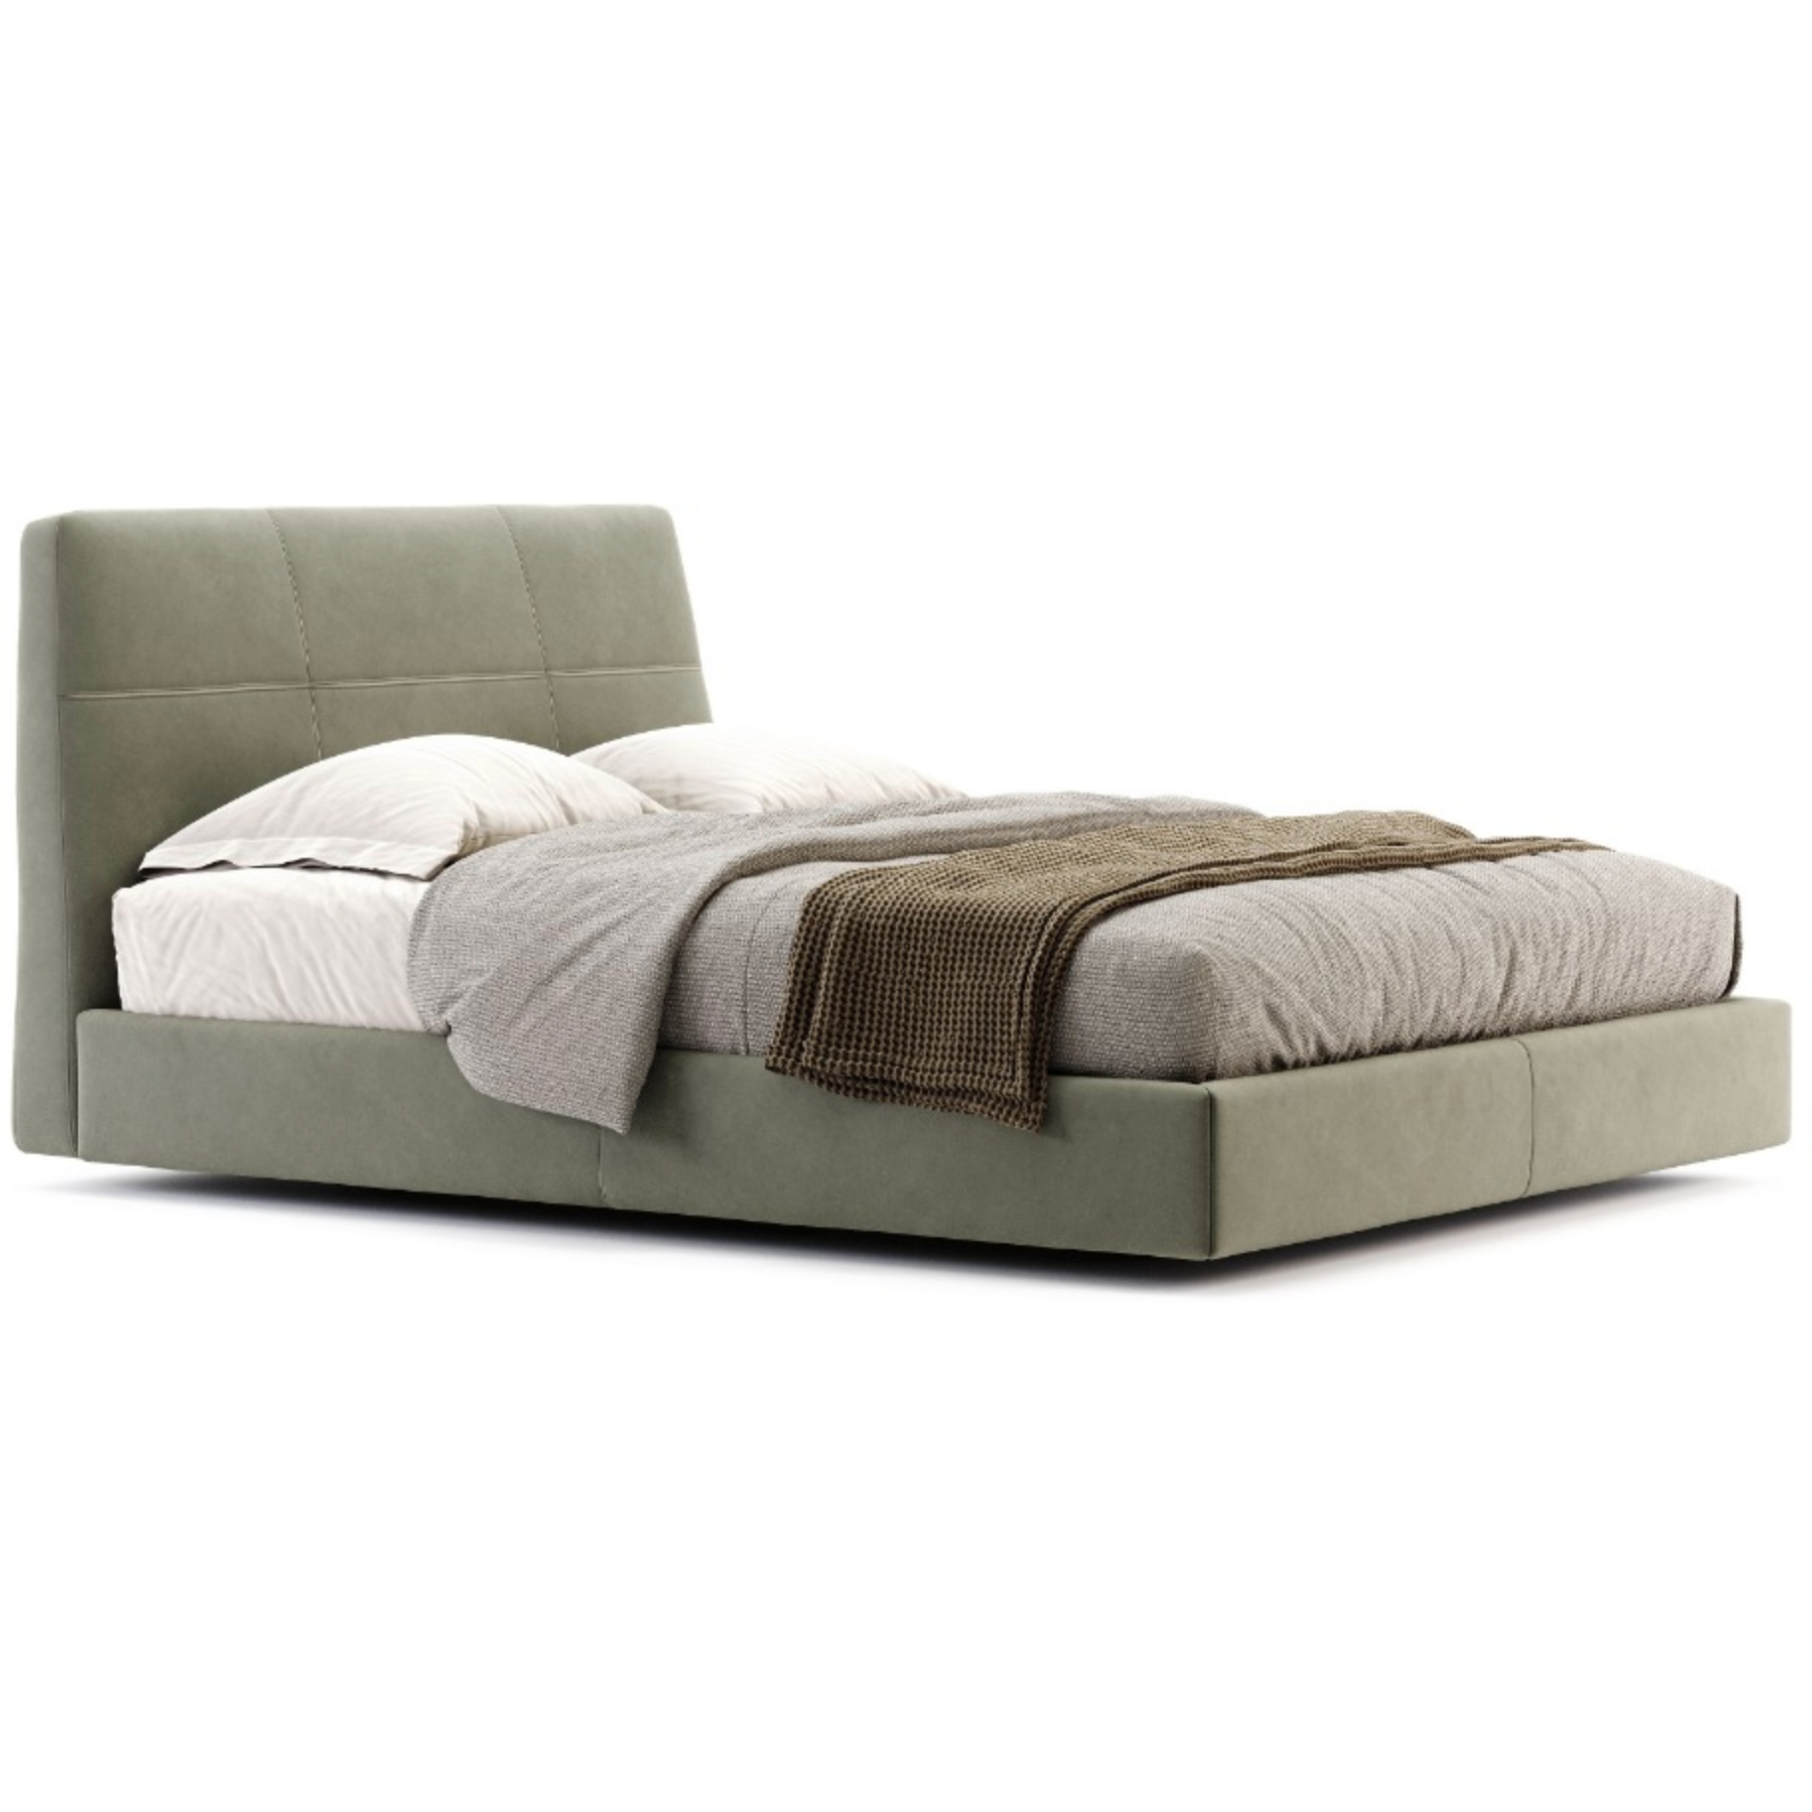 Domkapa Shelby King Size Bed - Customisable | Modern Furniture + Decor